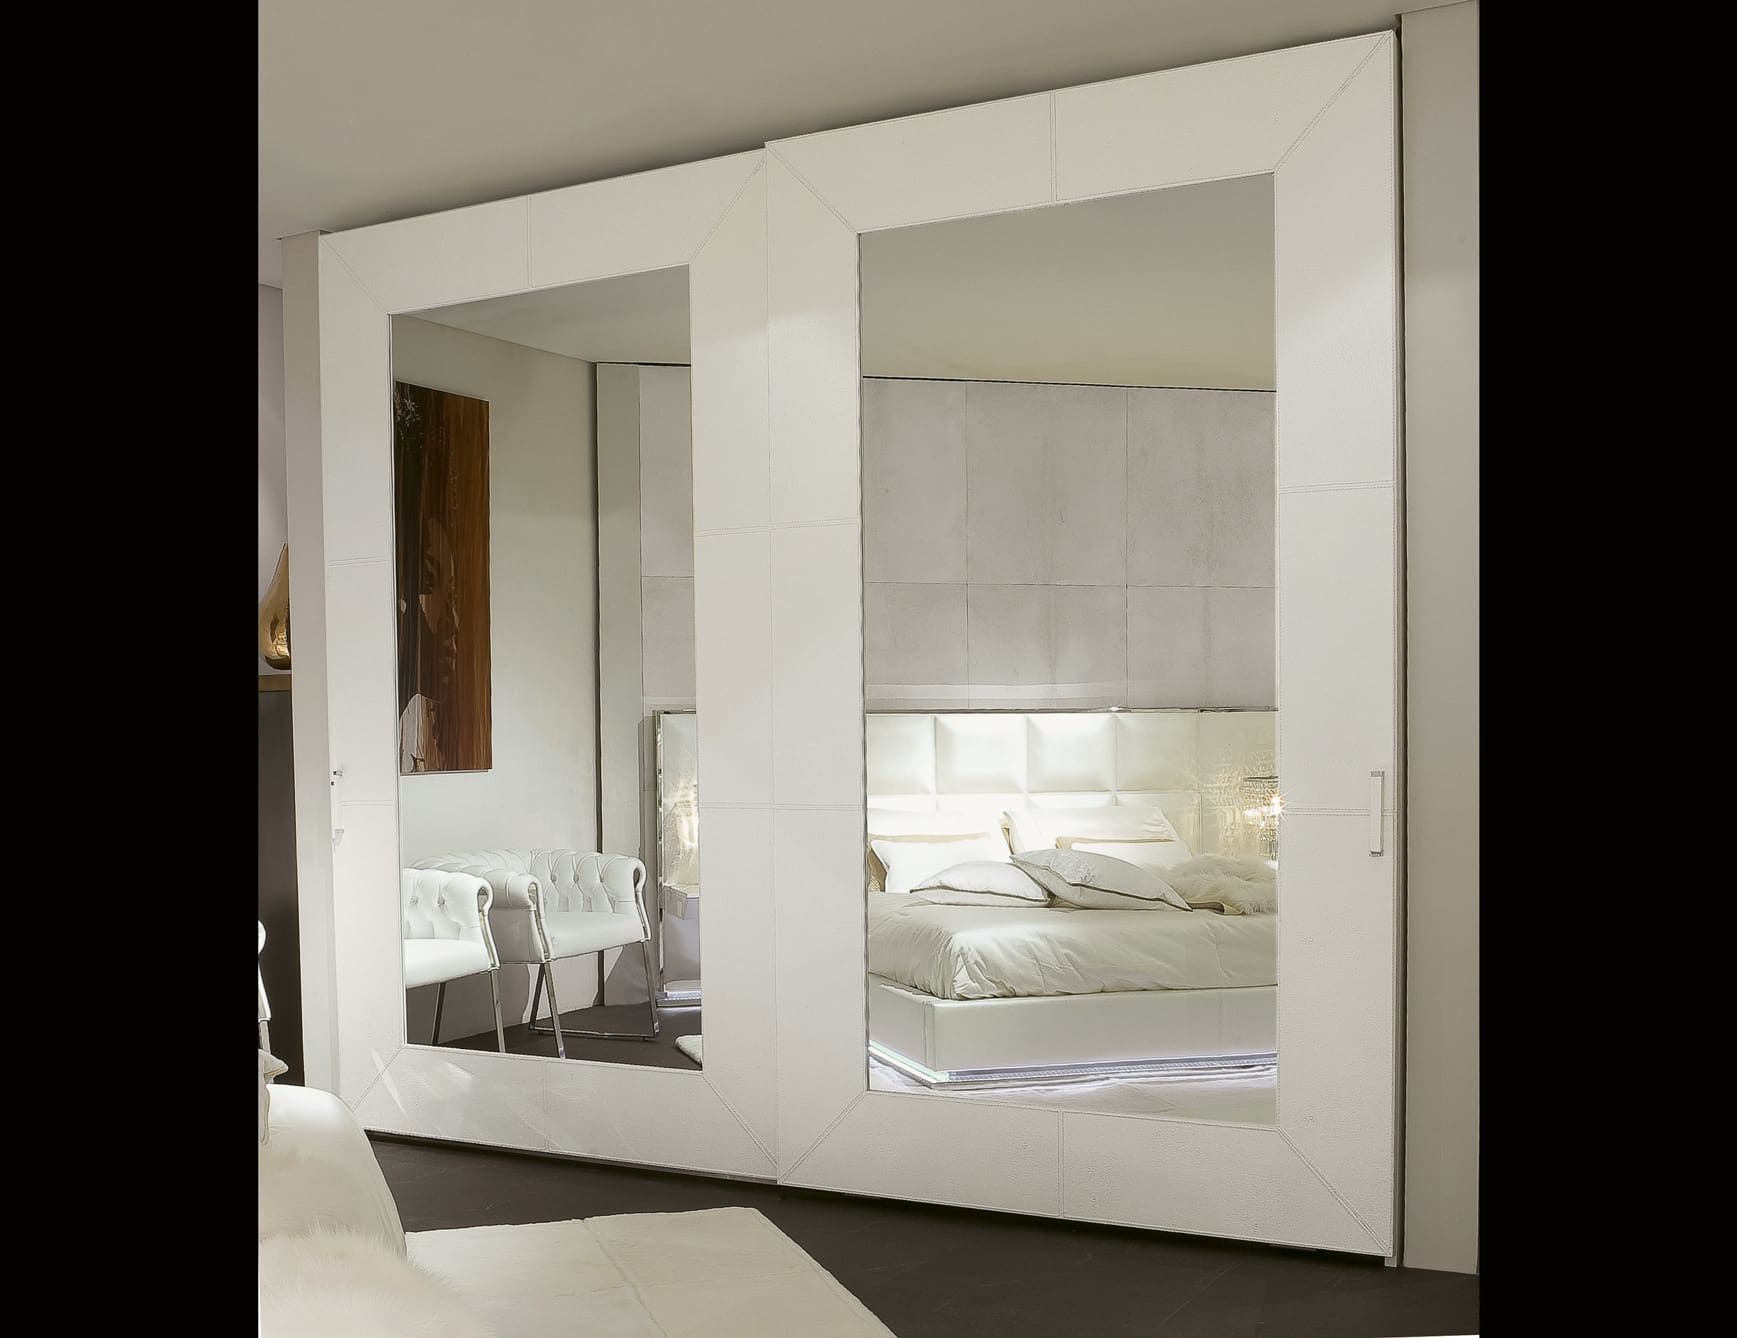 Piv modern luxury wardrobe with white leather